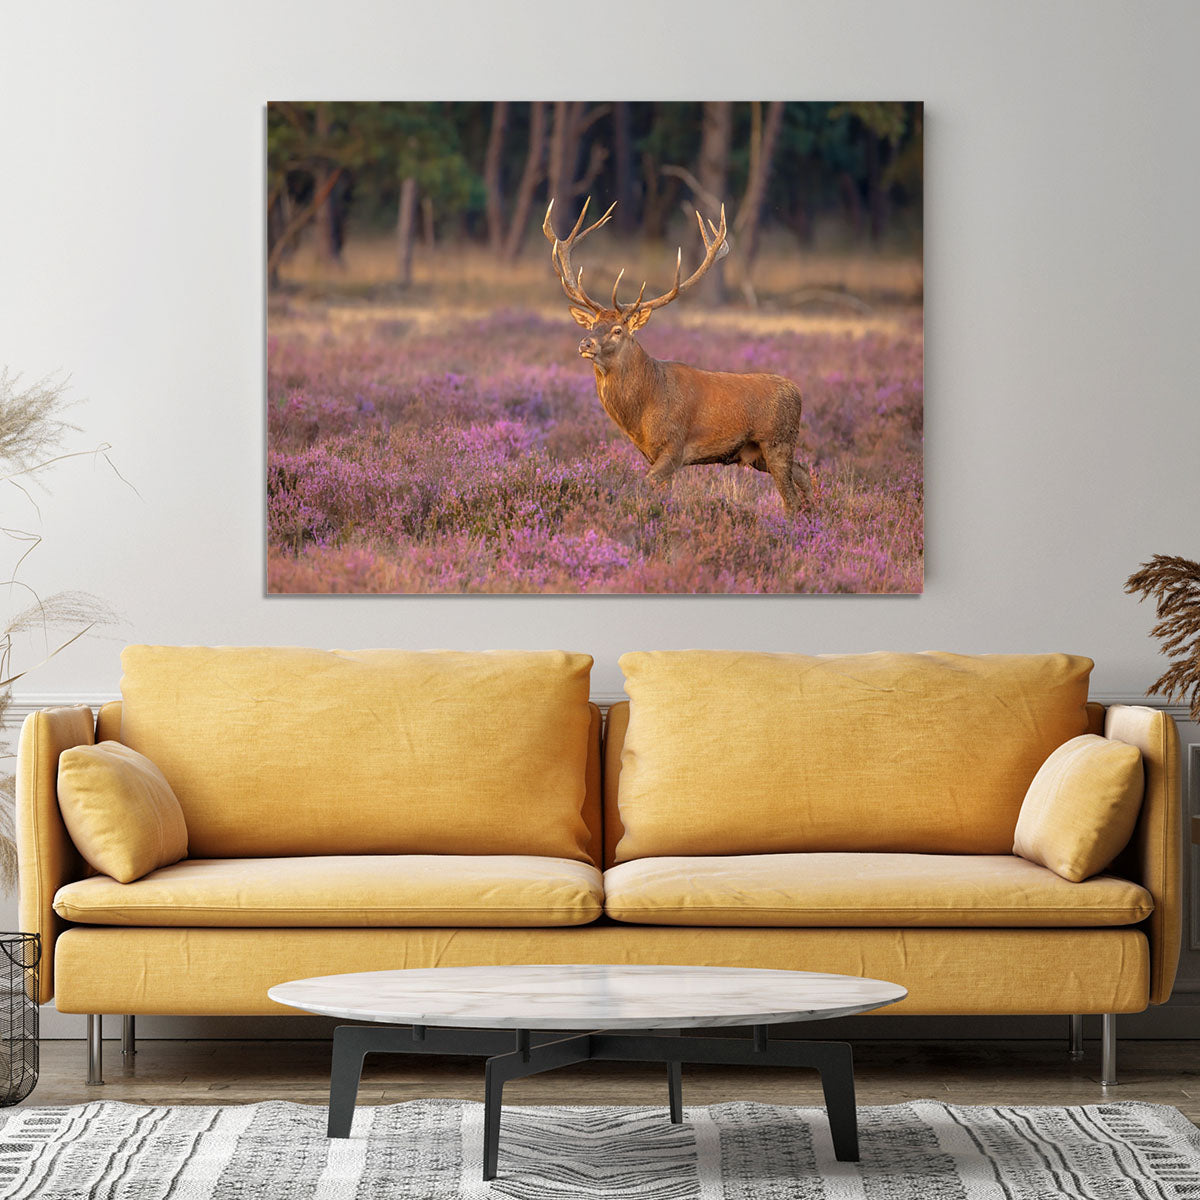 Male red deer Cervus elaphus with antlers during mating season Canvas Print or Poster - Canvas Art Rocks - 4